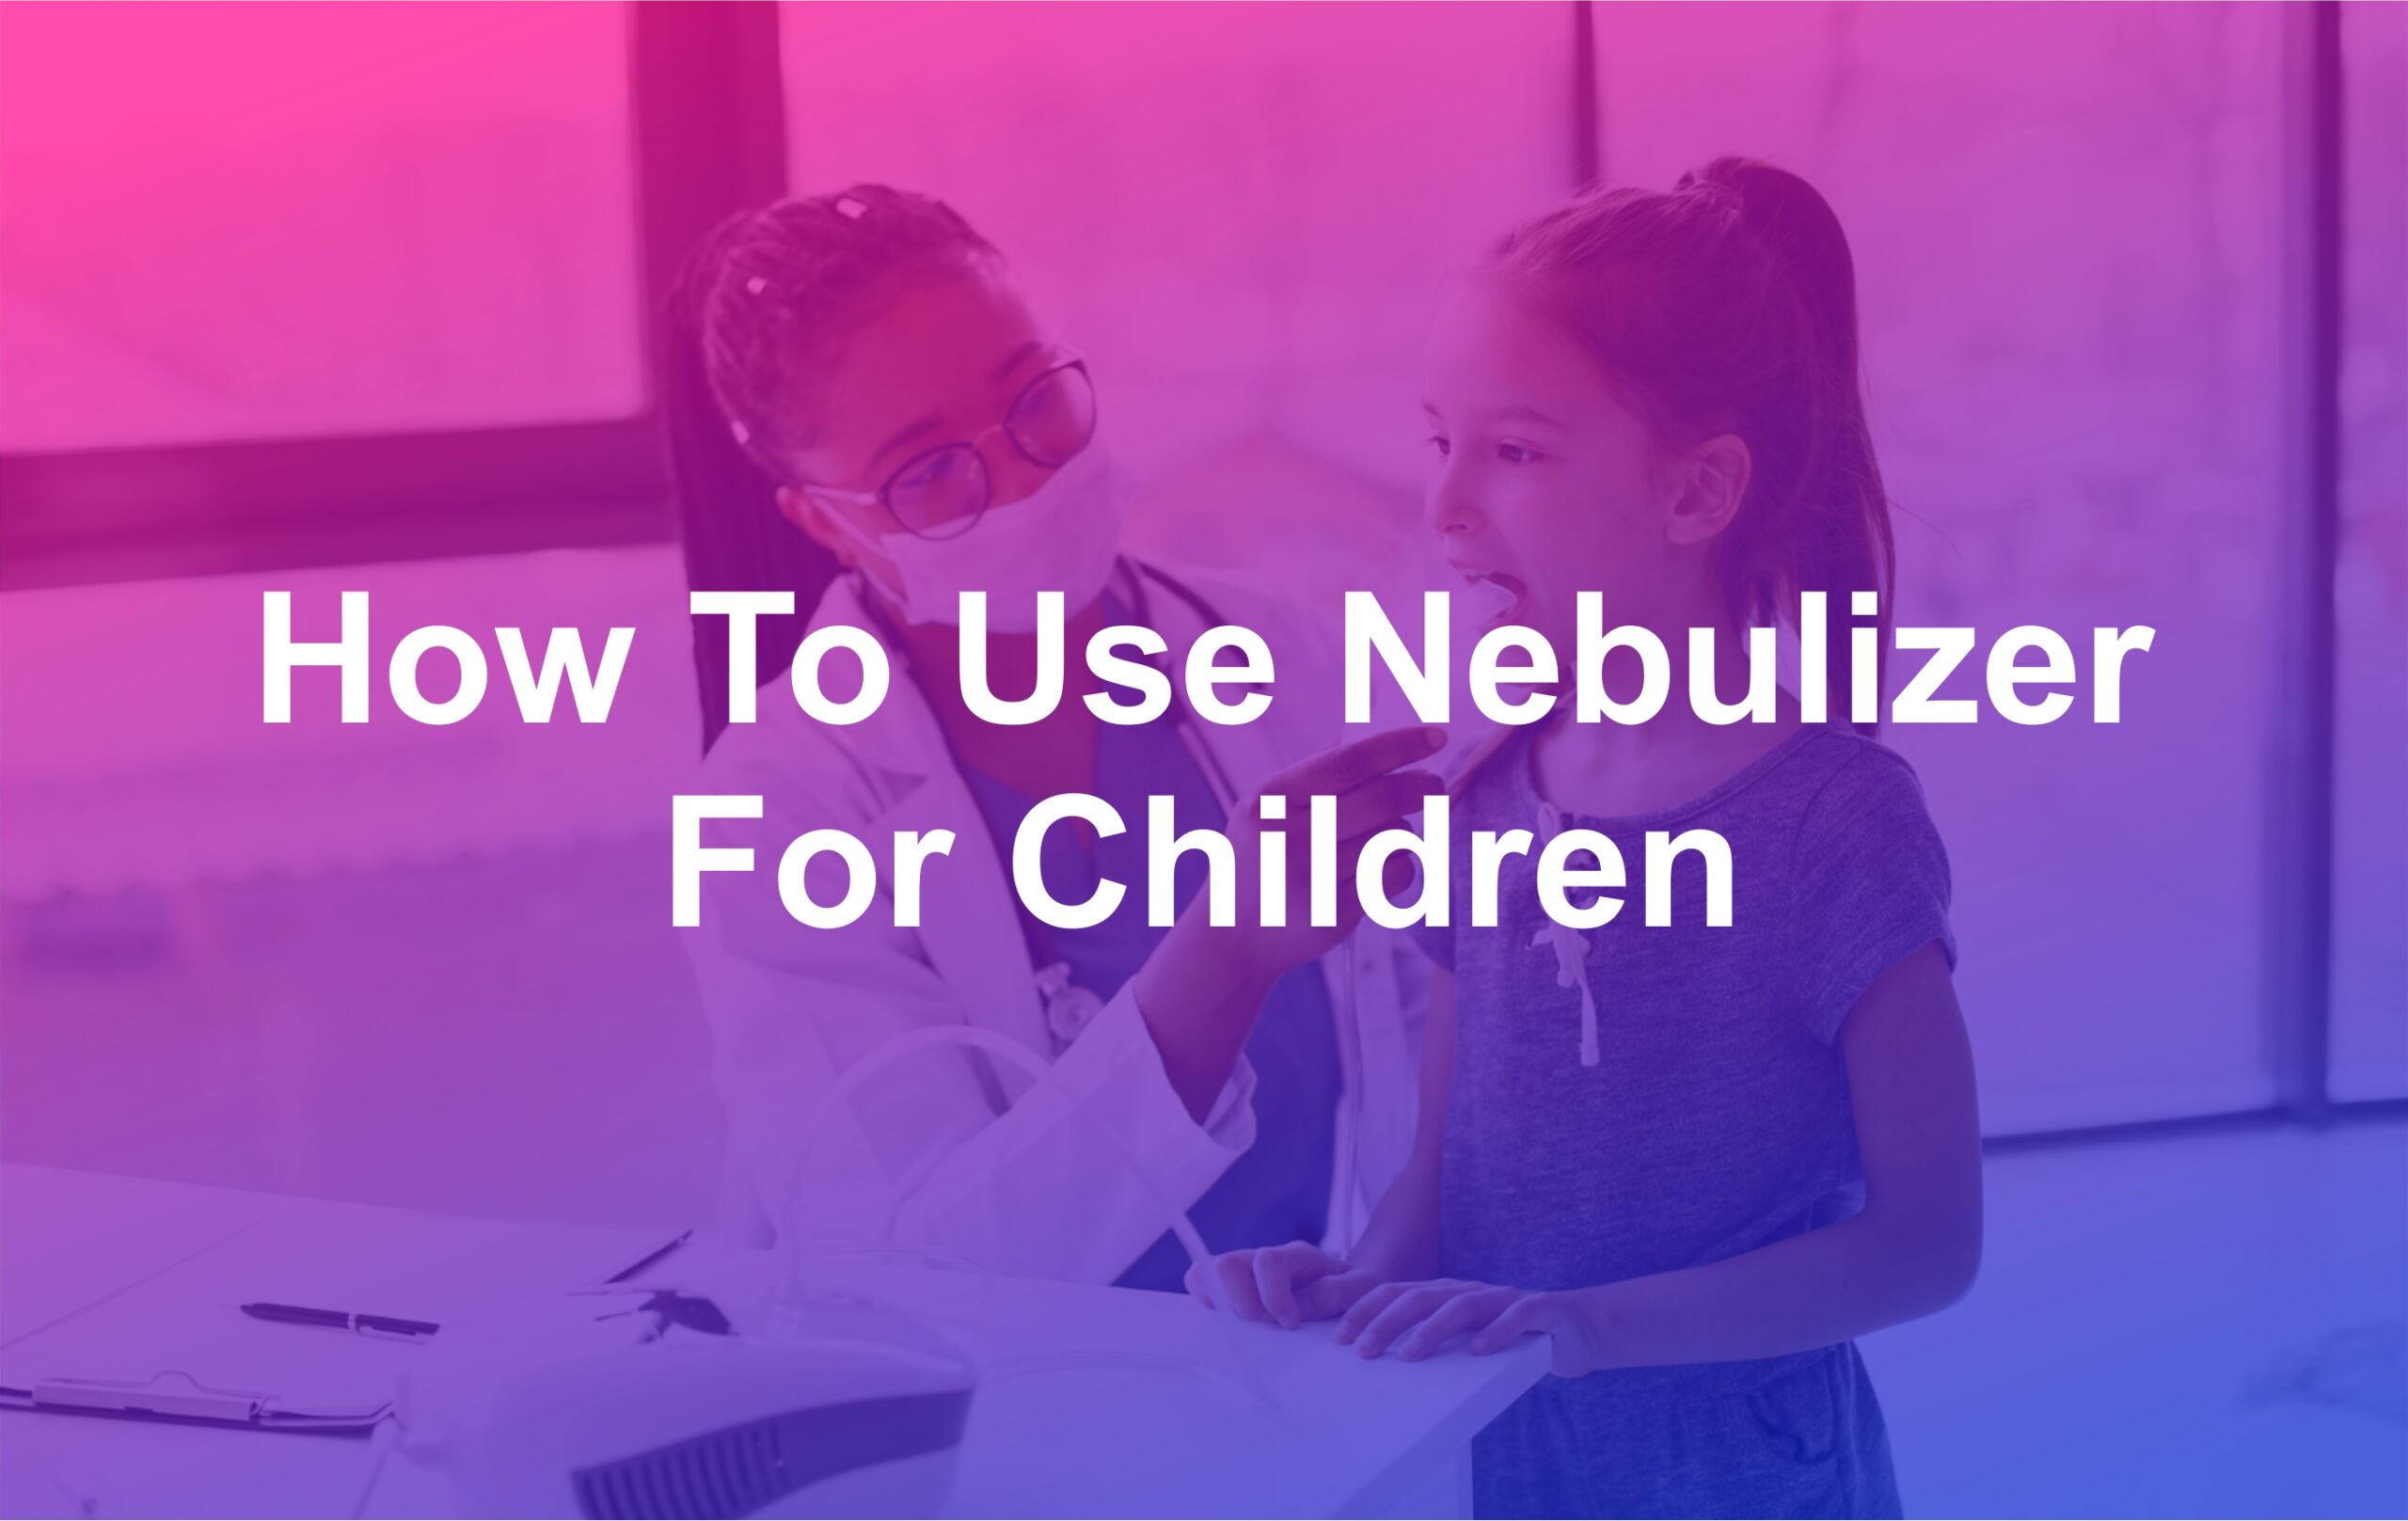 how to use nebulizer